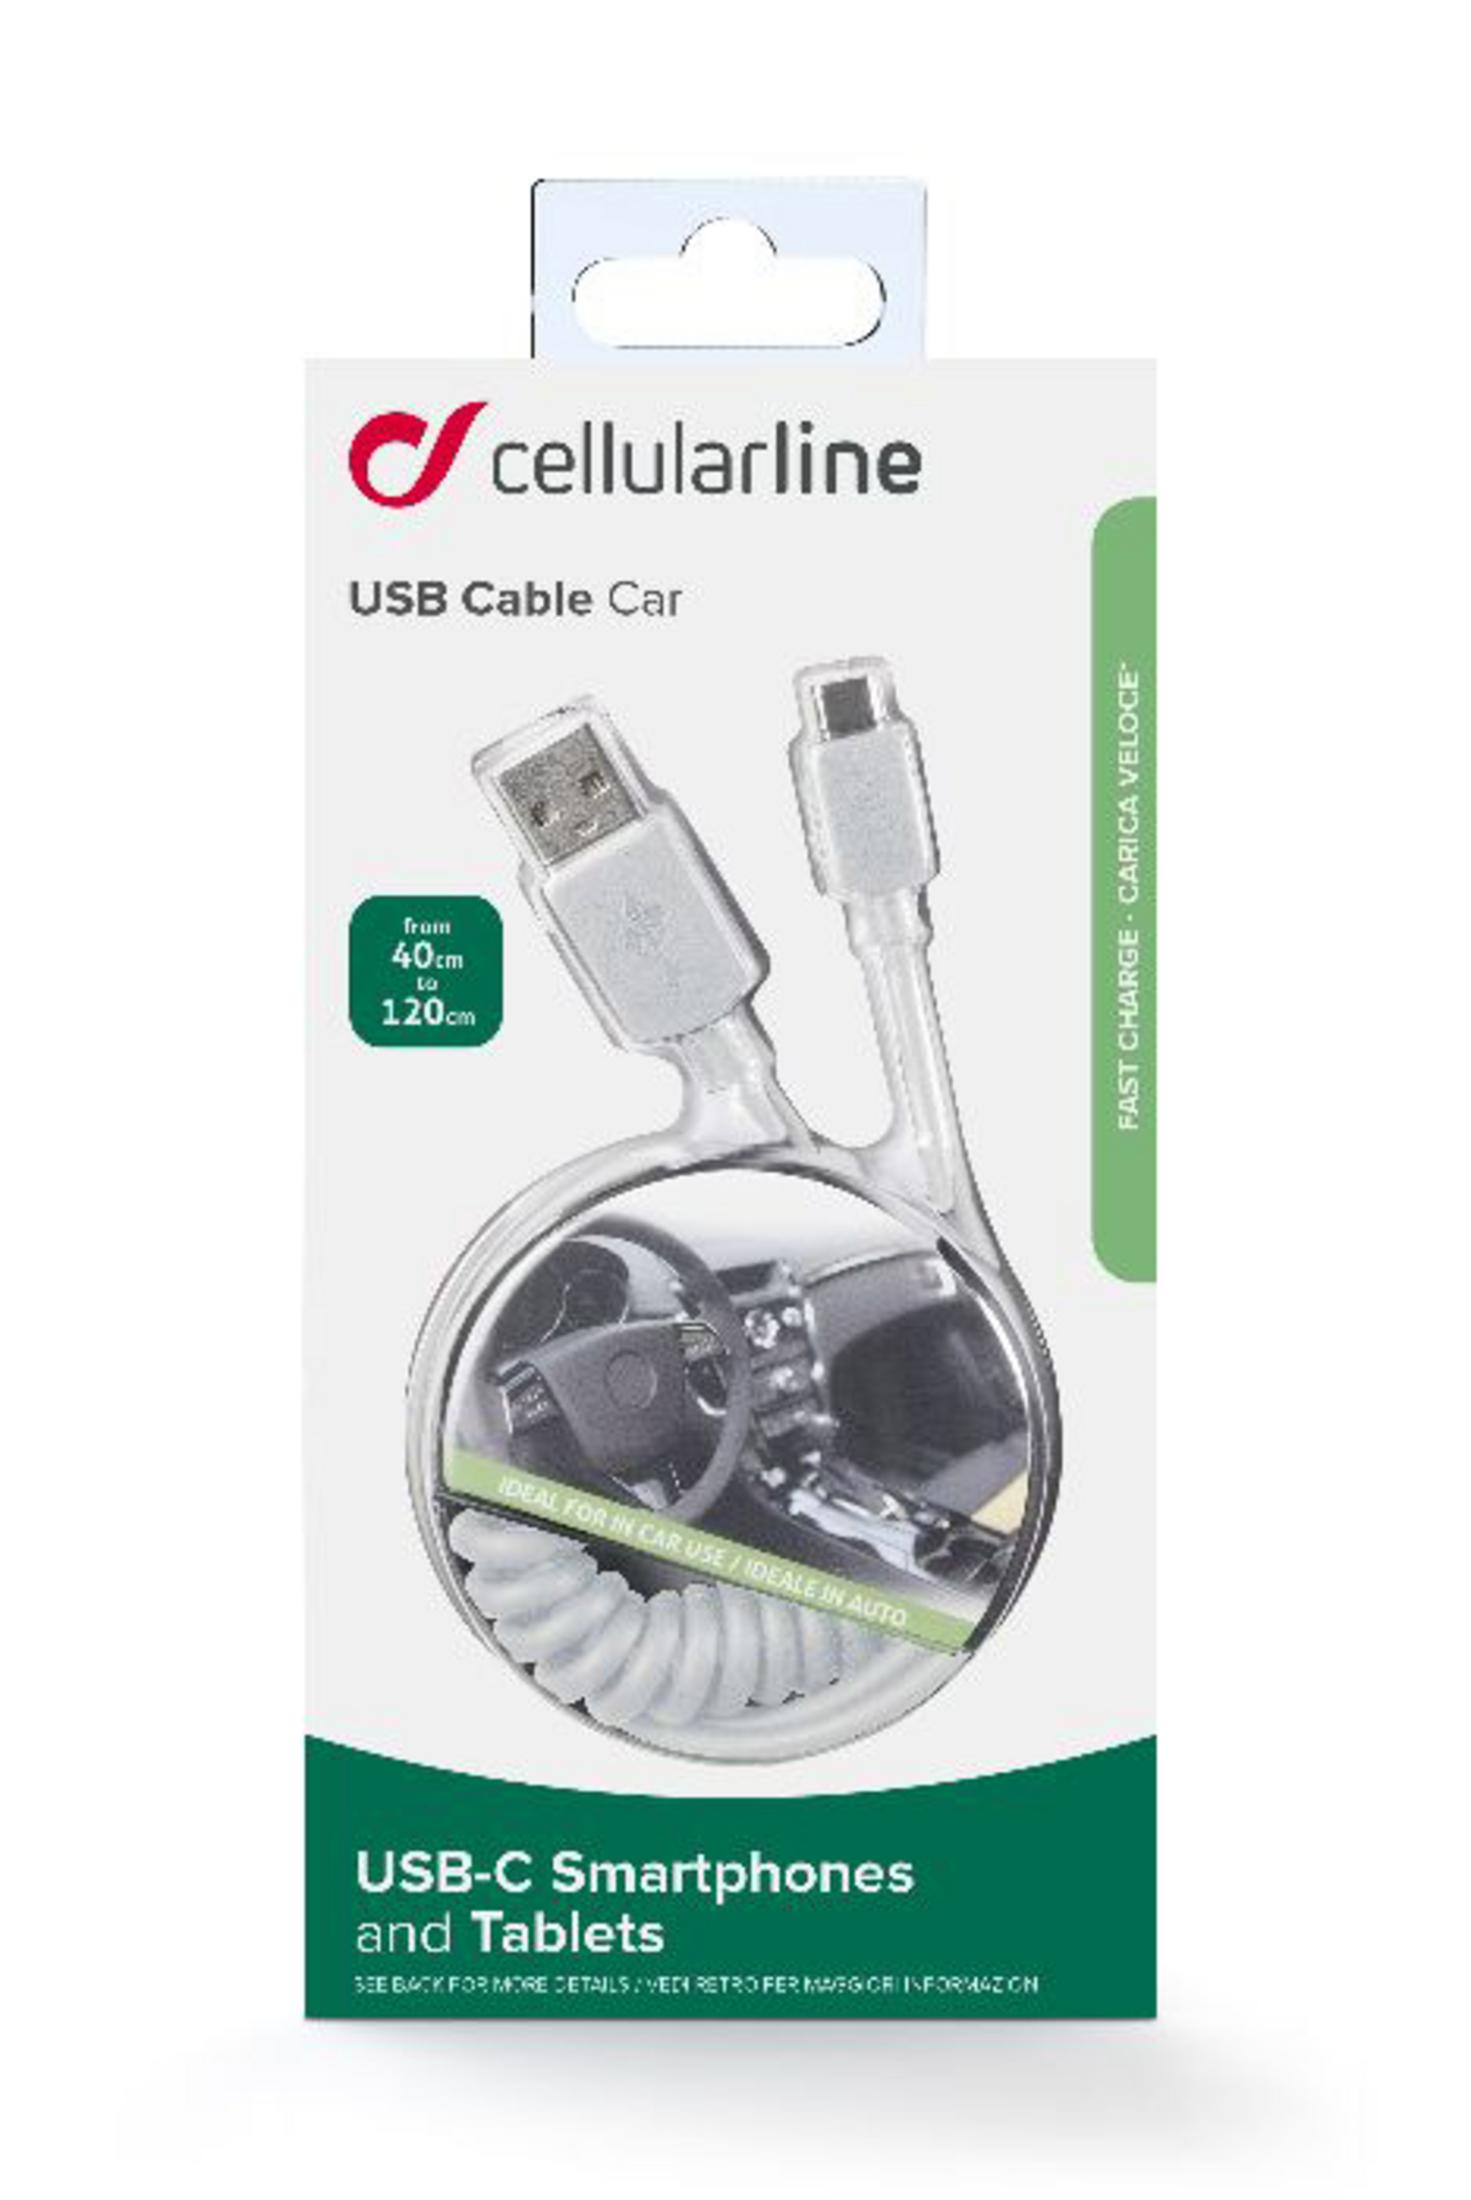 CELLULAR LINE 38569 USBDATACOIUSBCW USB-C 0,4 Datenkabel/Ladekabel, Weiß m, KASPIR